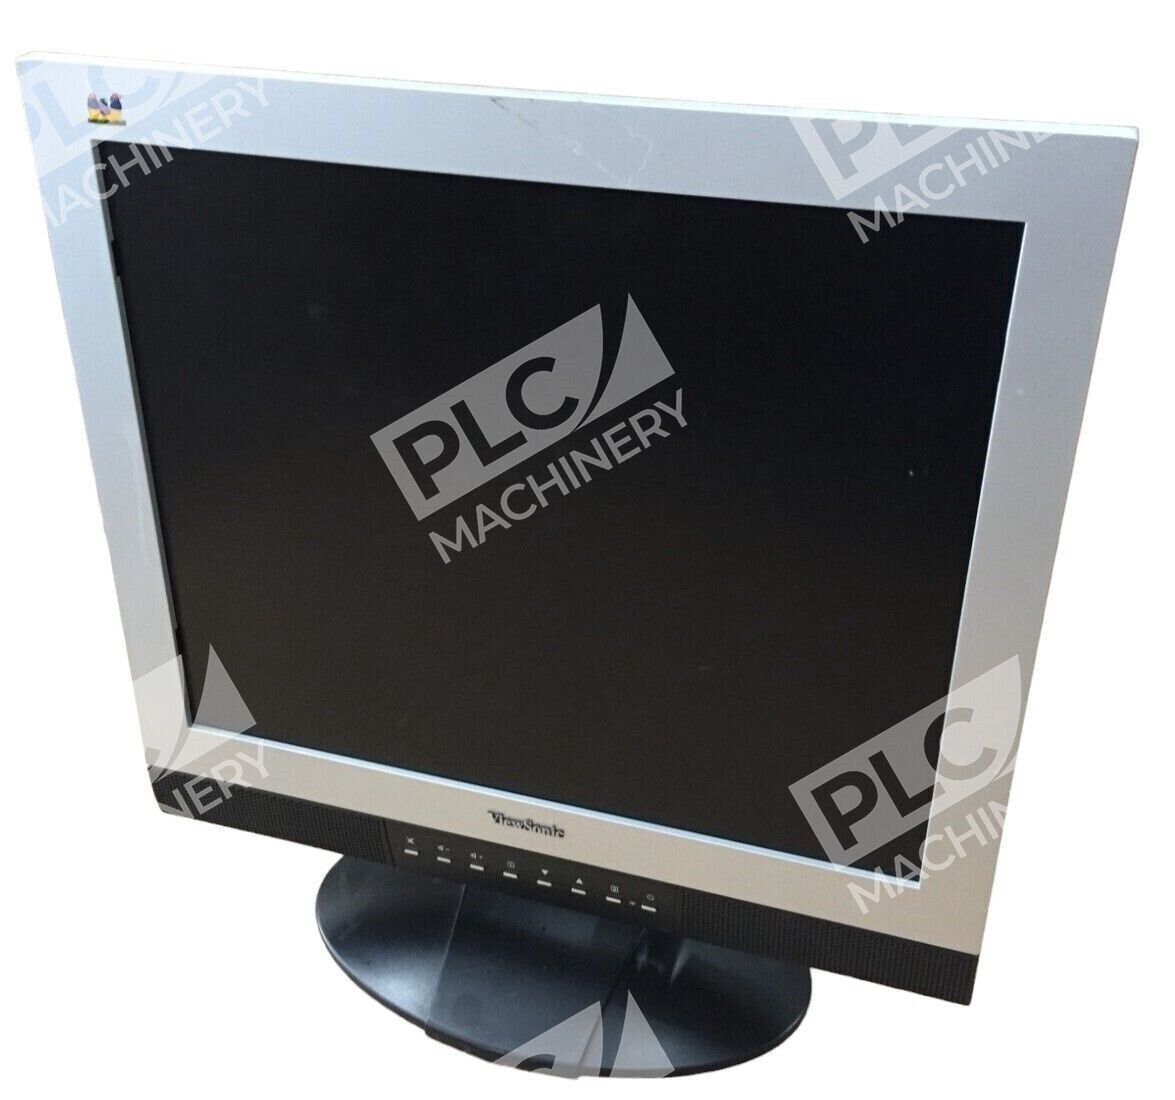 ViewSonic VX900 LCD Monitor VLCDS23668-1W (no power cord)